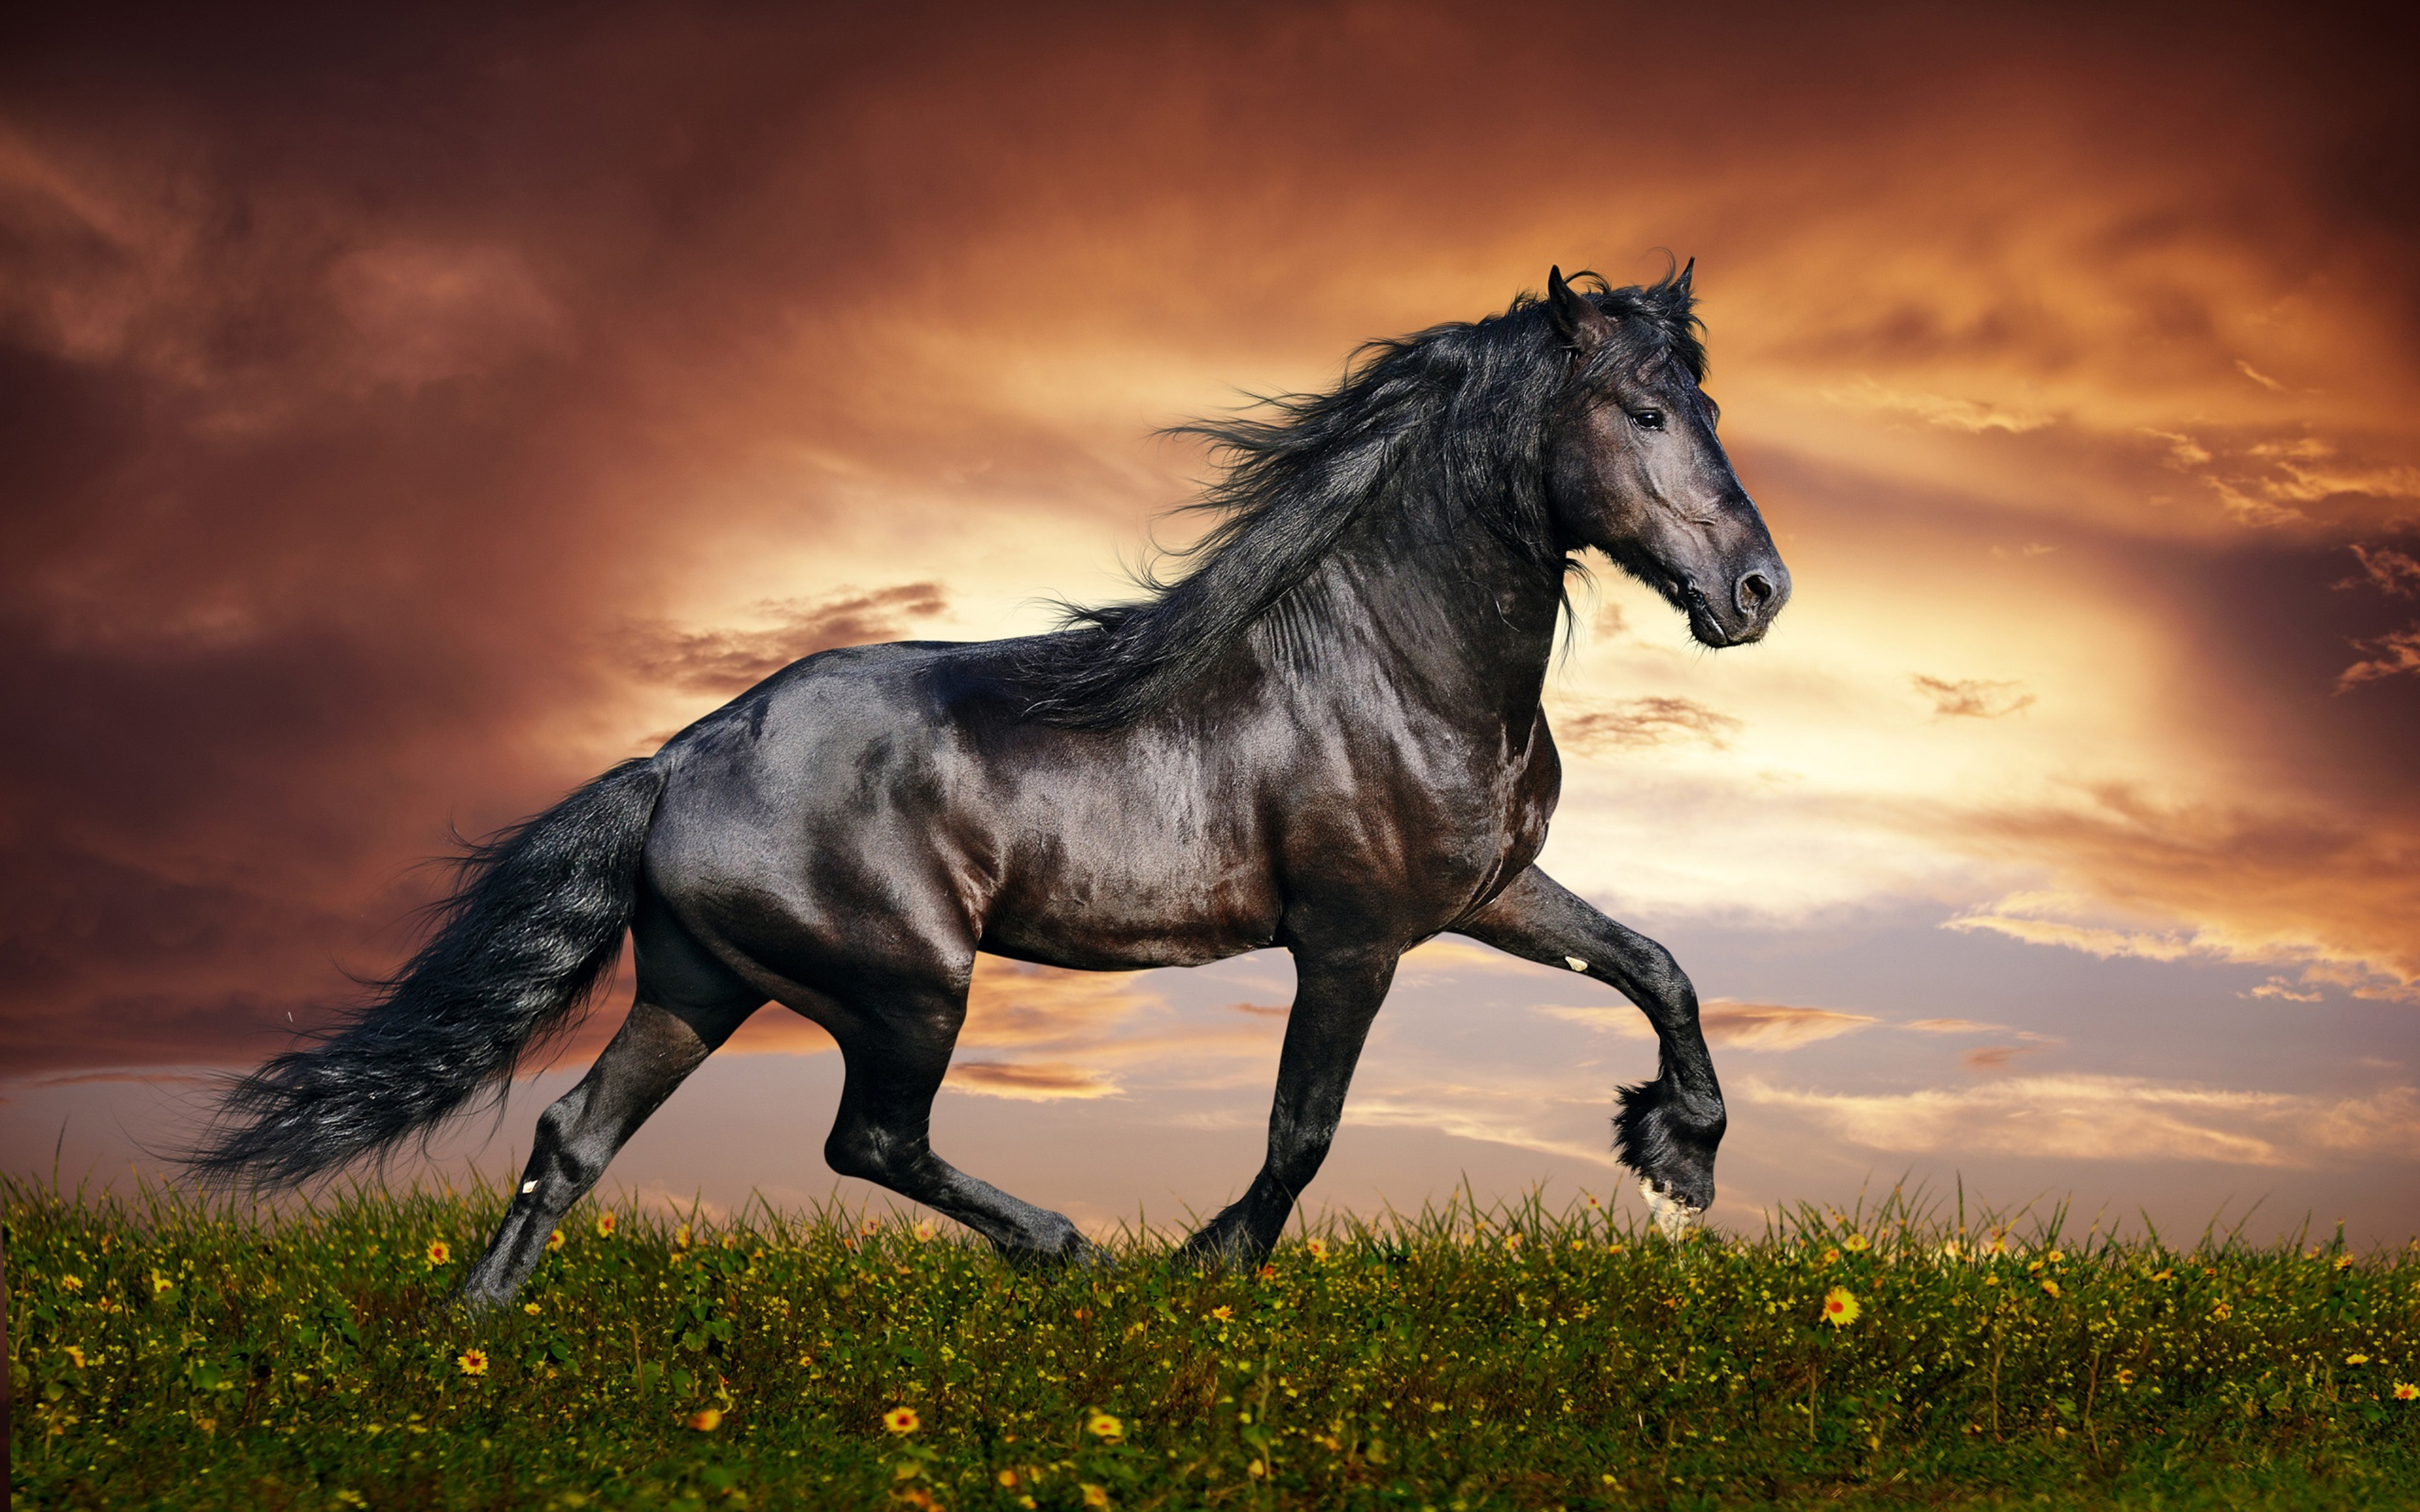 Arabian Black Horse Widescreen Images High Resolution Desktop Wallpapers Hd : Wallpapers13.com